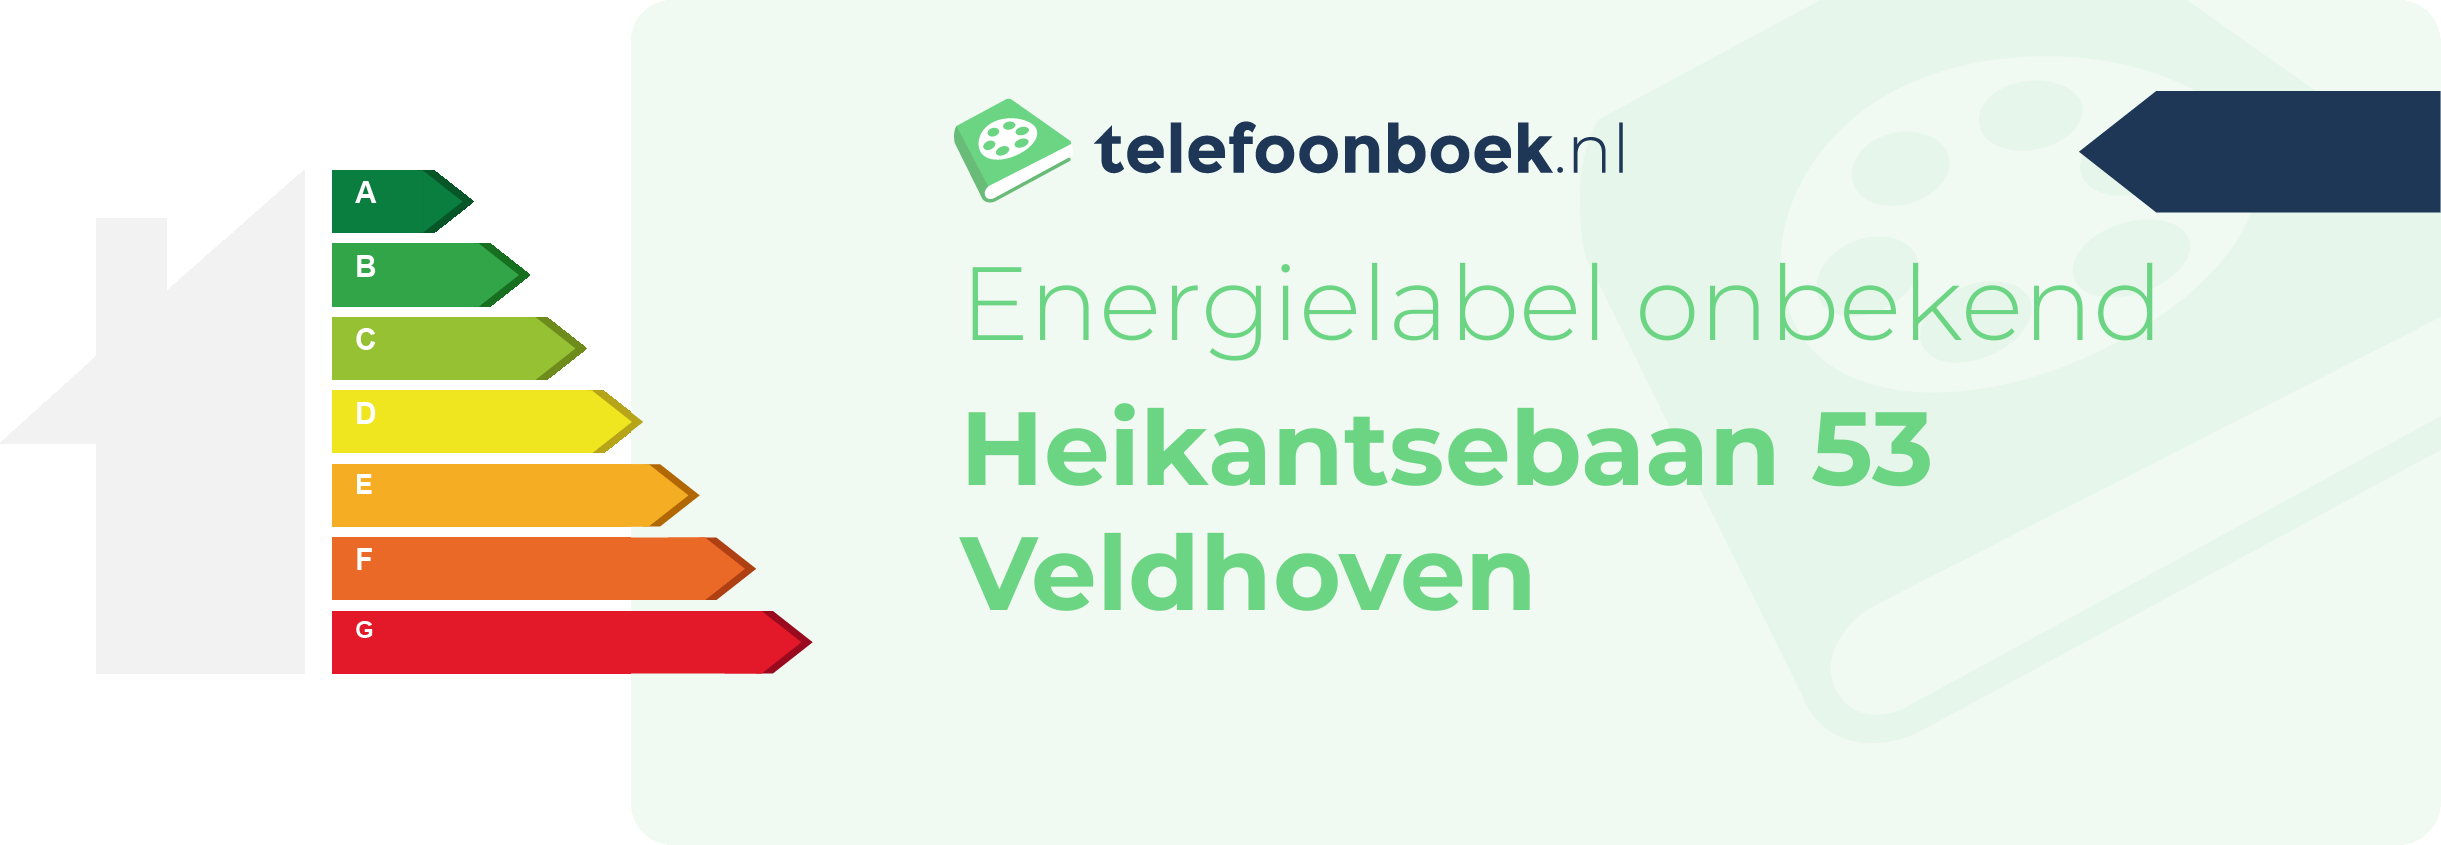 Energielabel Heikantsebaan 53 Veldhoven